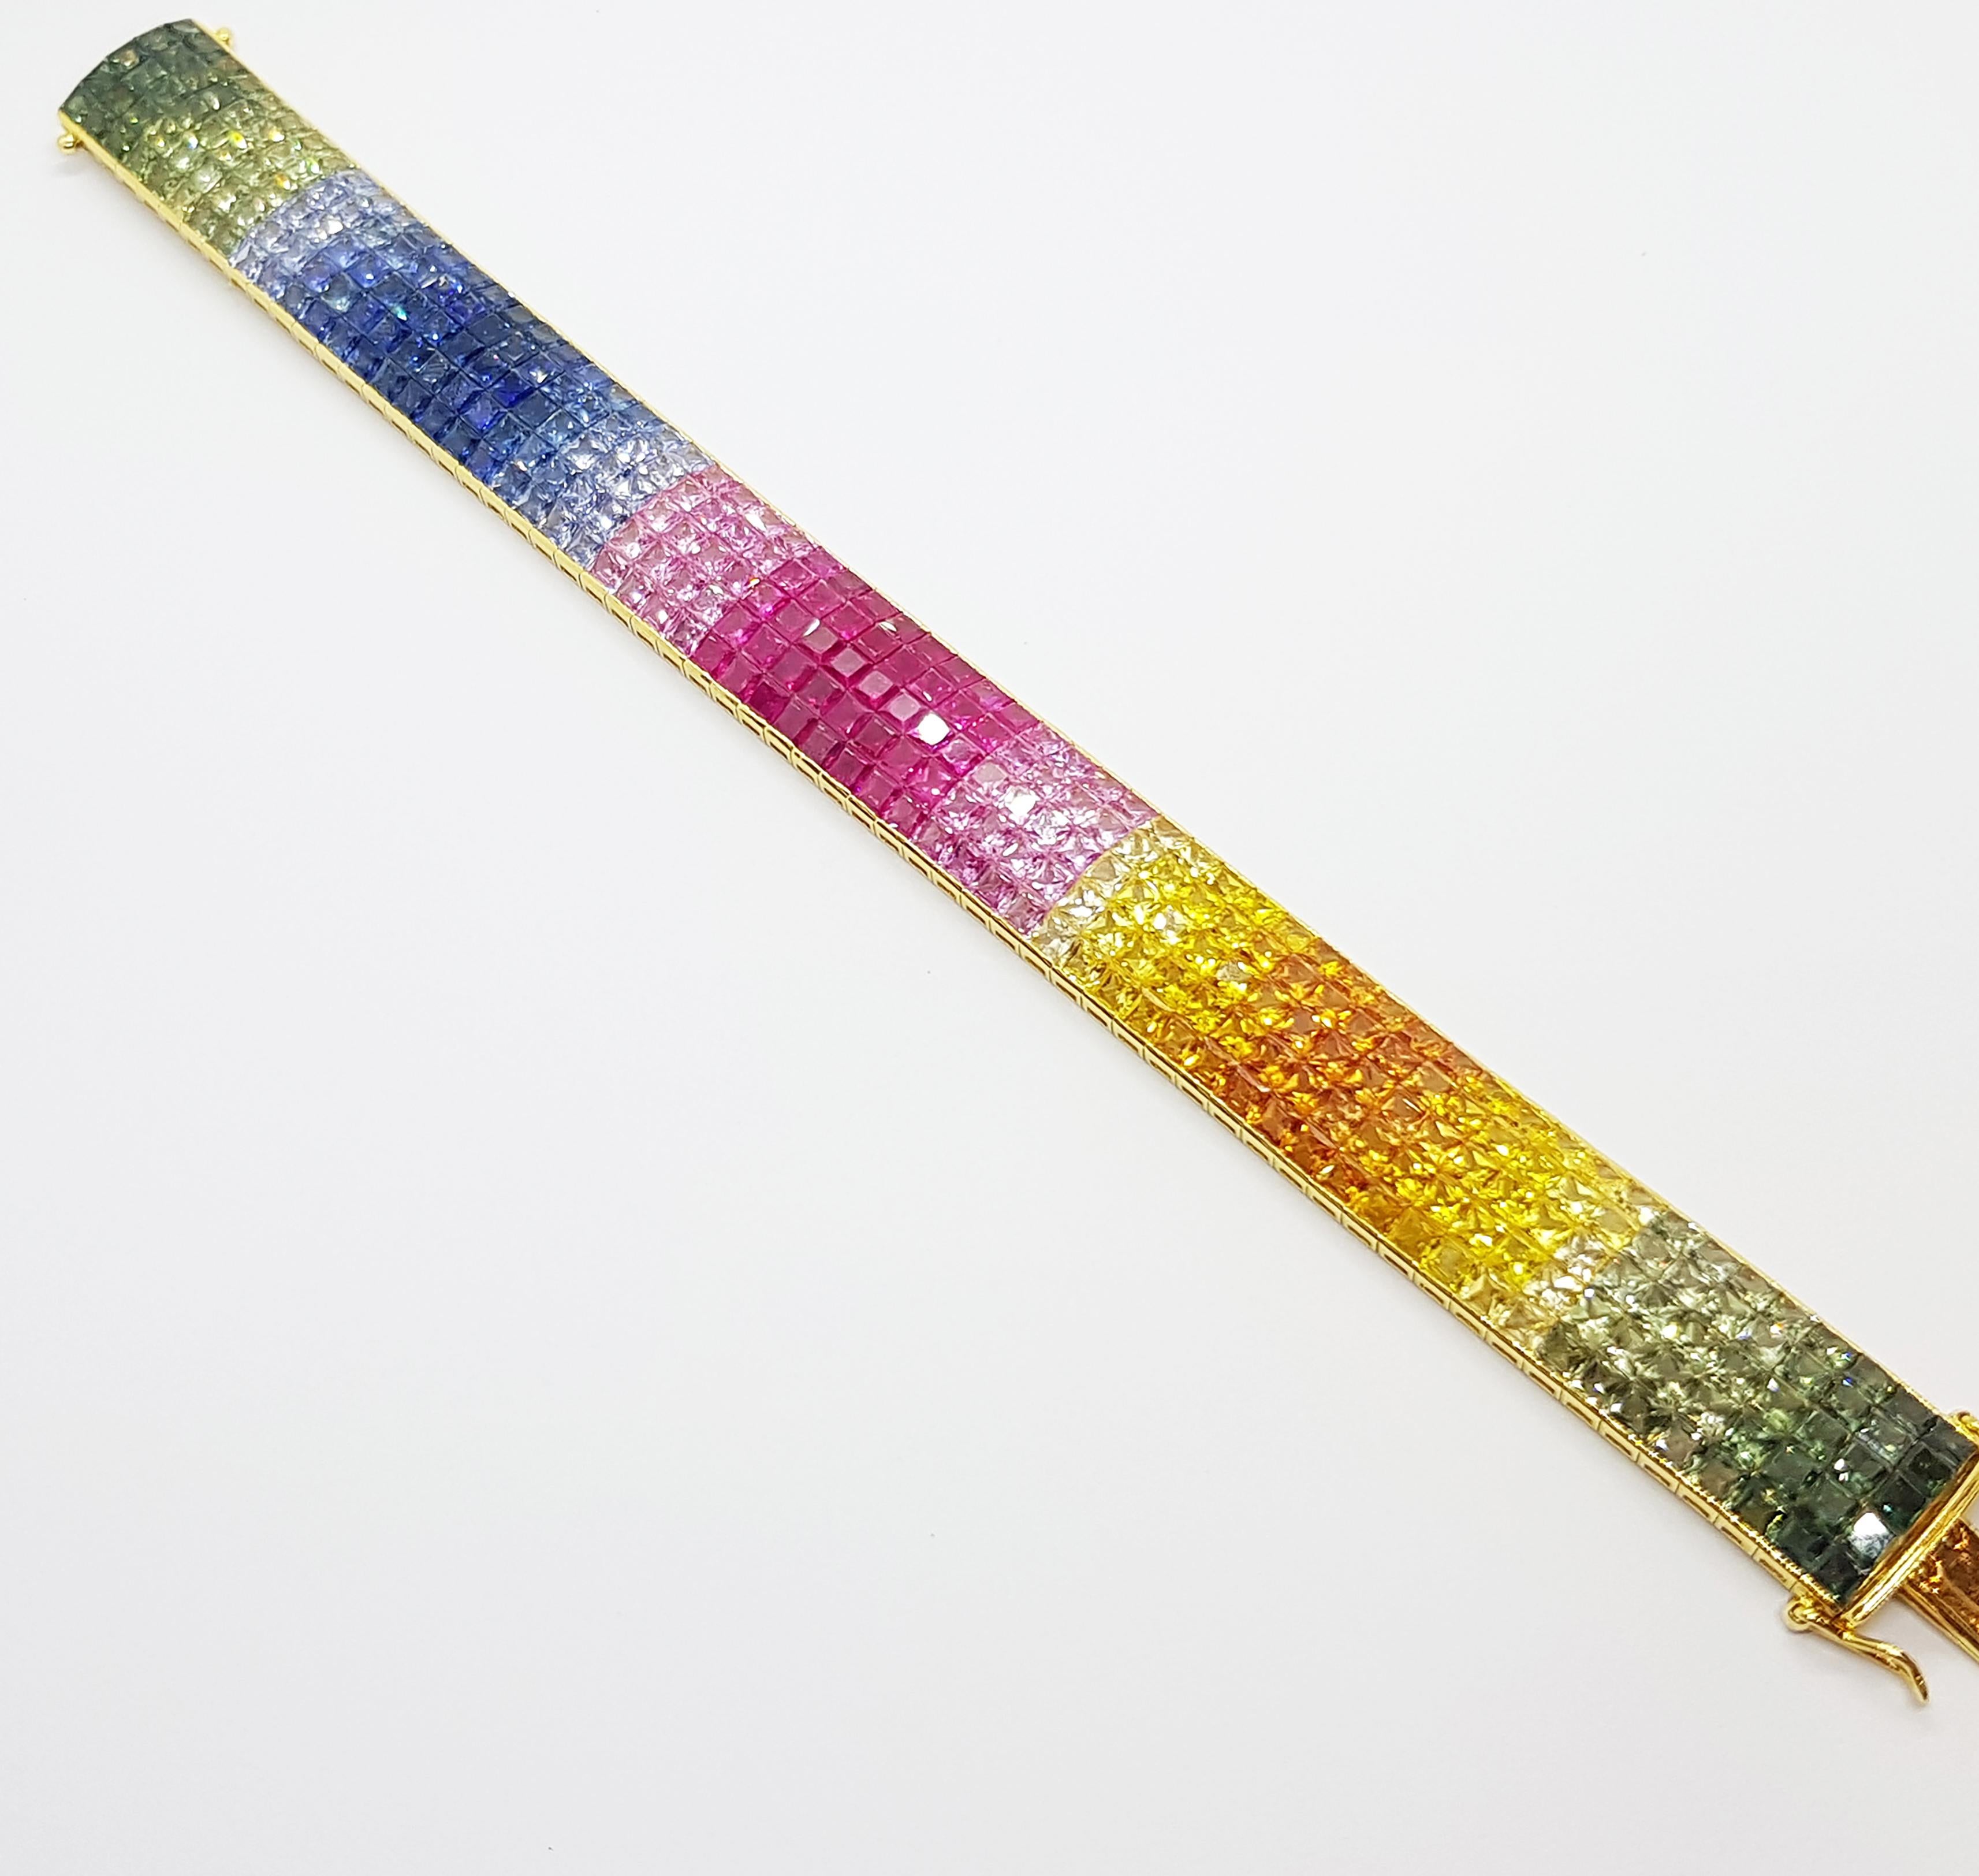 Rainbow Colour Sapphire 58.90 carats Bracelet set in 18 Karat Gold Settings

Width:  1.5 cm 
Length: 17.9 cm
Total Weight: 47.39 grams

